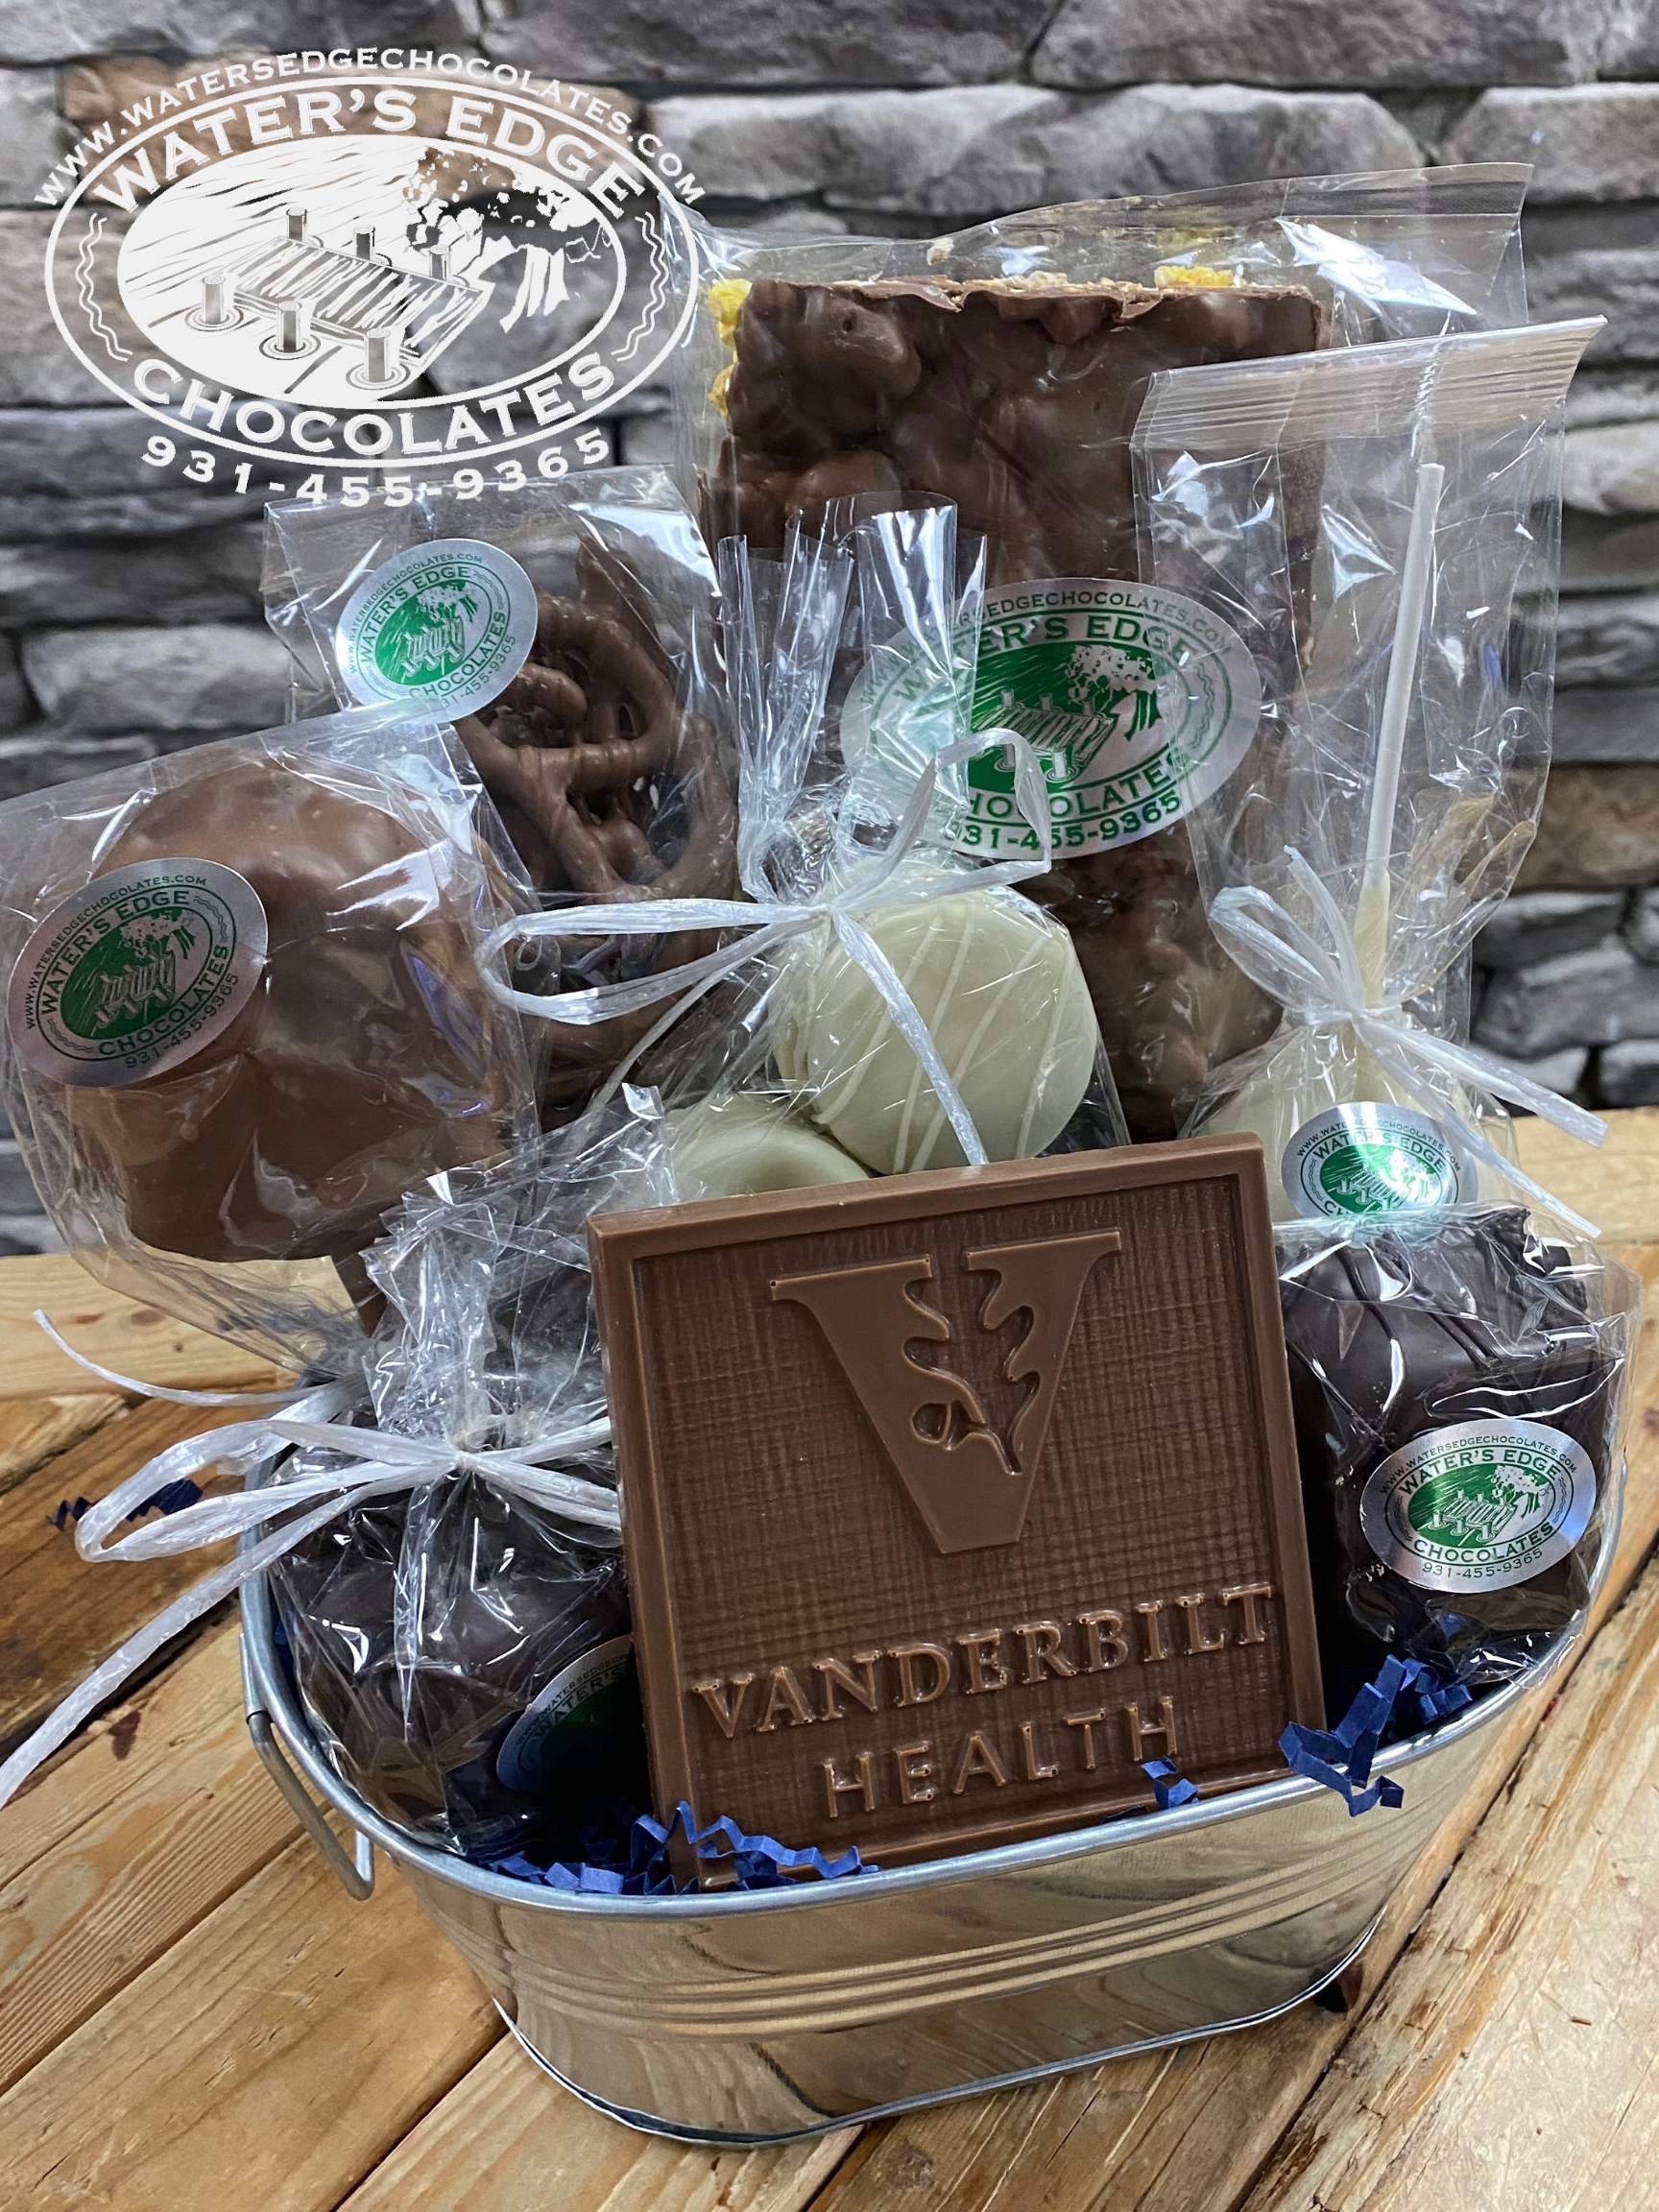 Vanderbilt $55 Chocolate Gift Basket